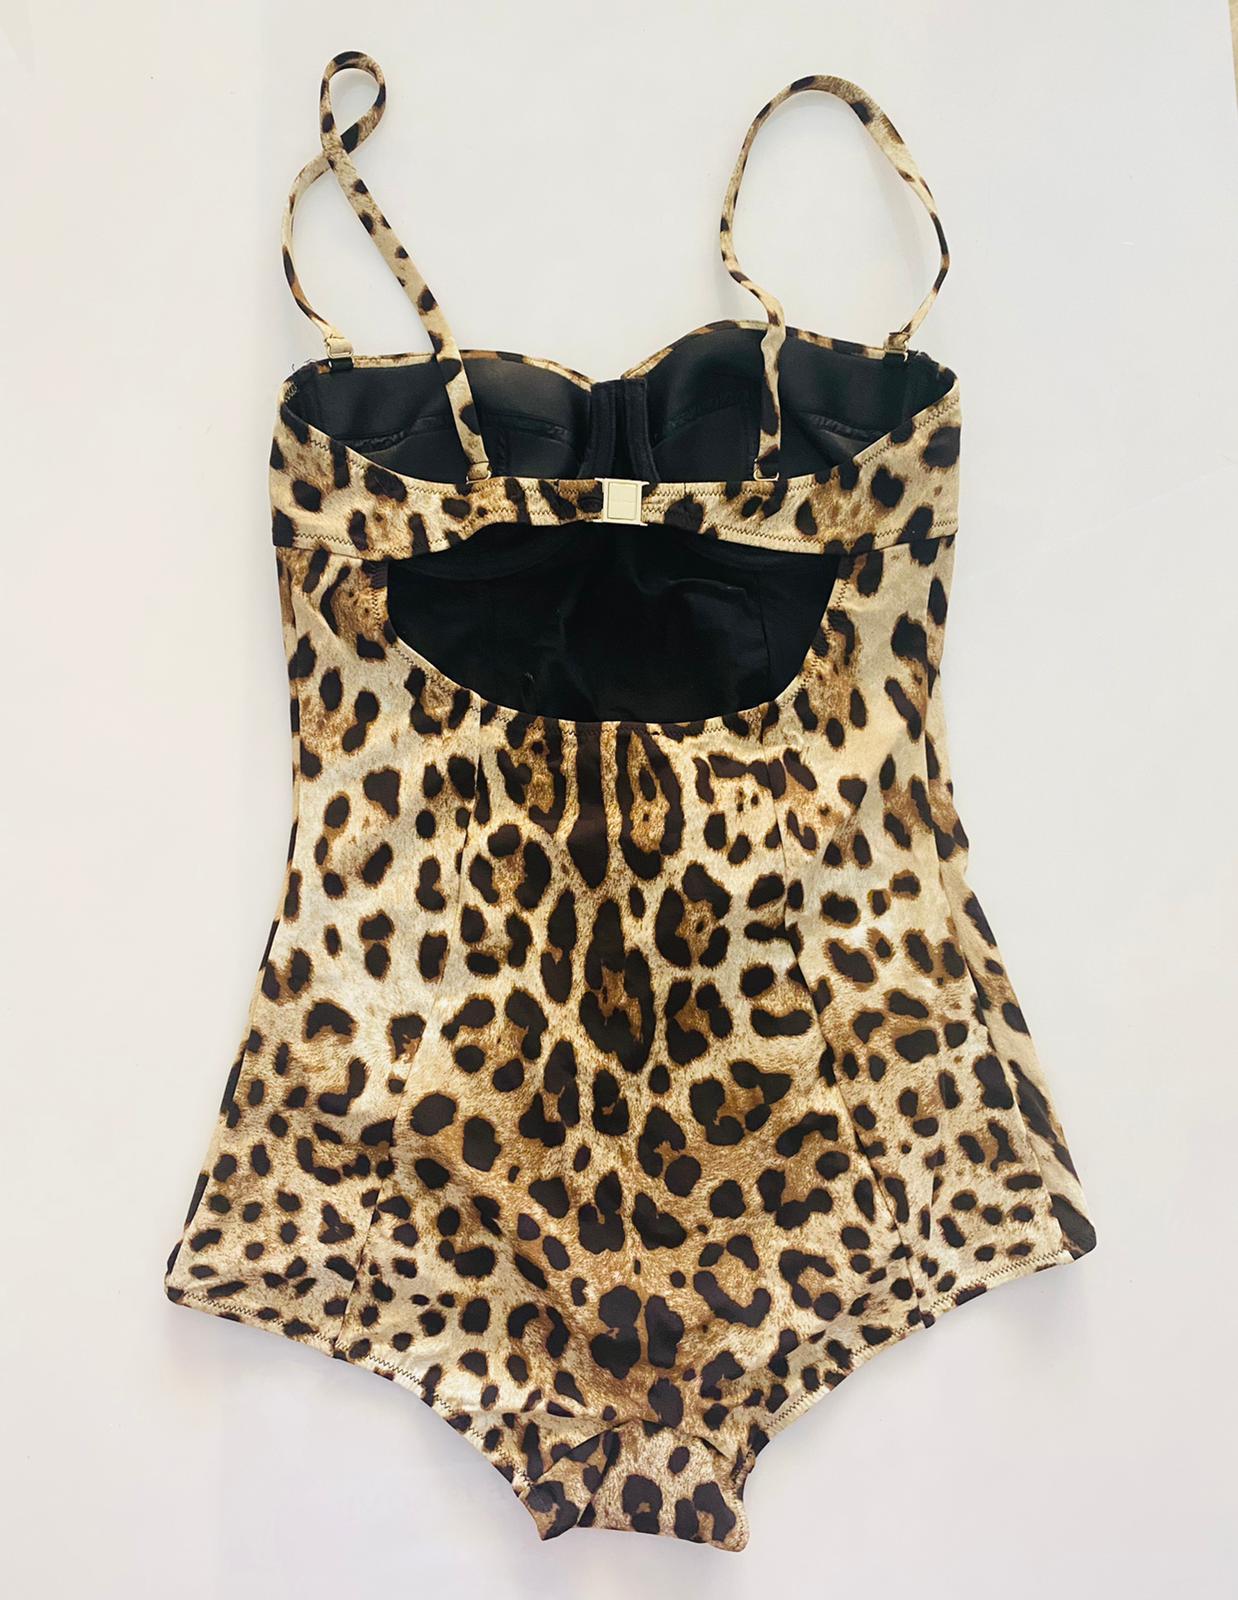 Dolce & Gabbana Brown Leopard One-piece Full Swimsuit Swimwear Beachwear Bikini 2